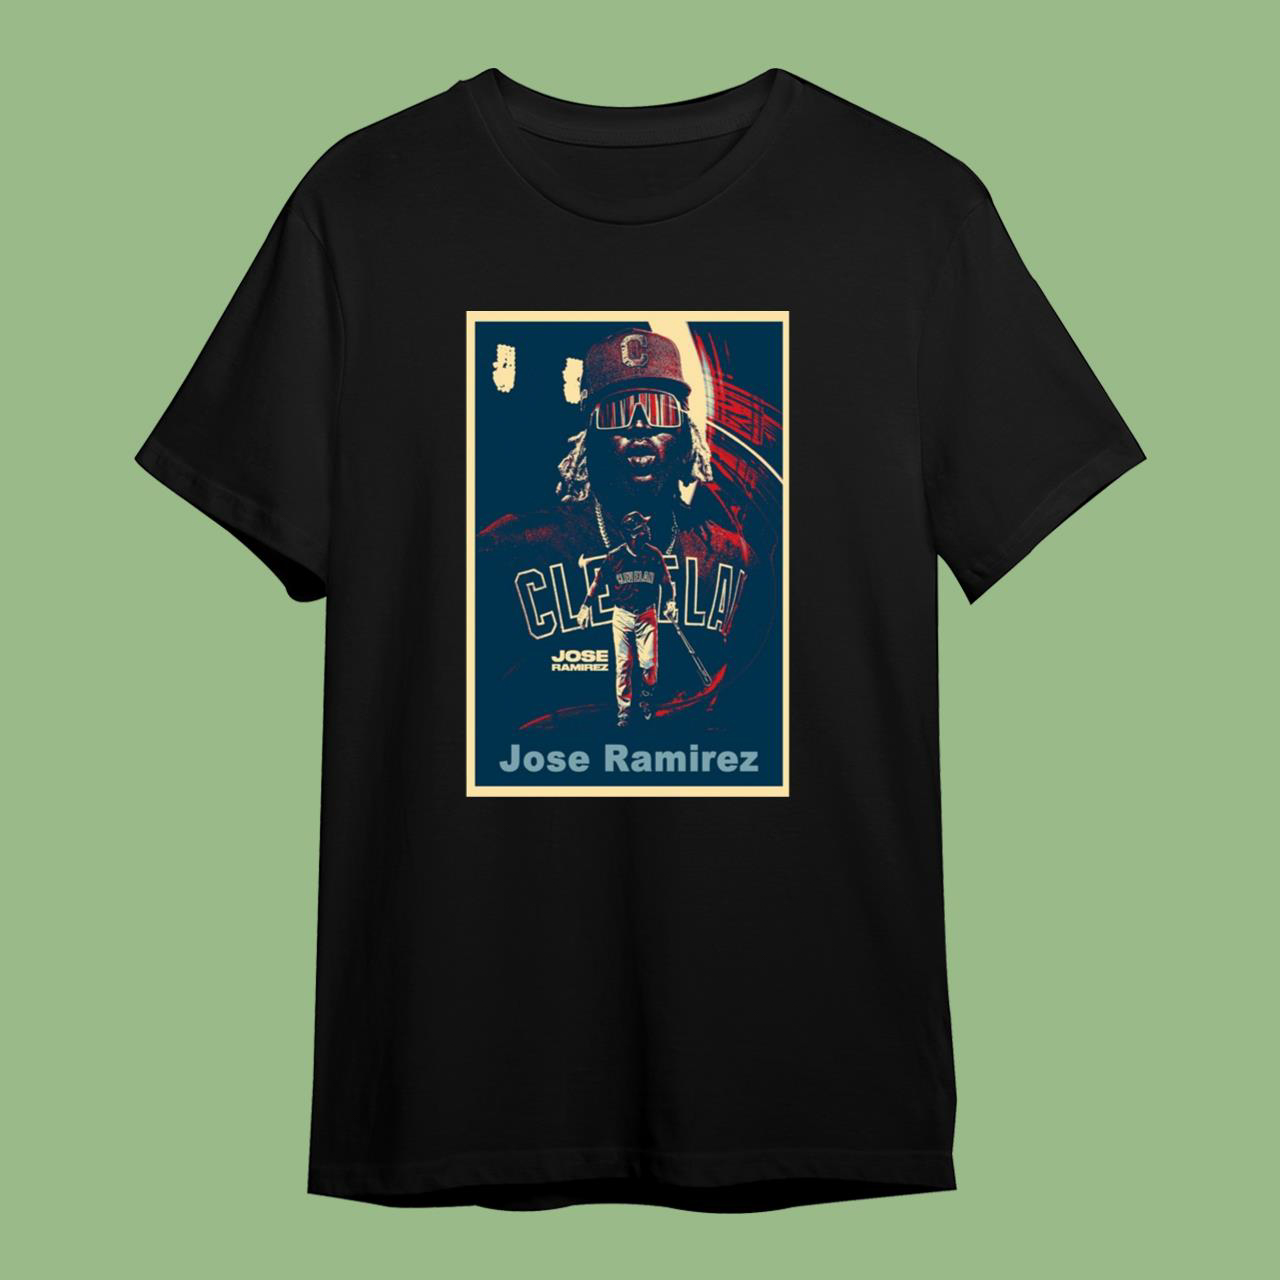 Jose Ramirez Retro T-Shirt